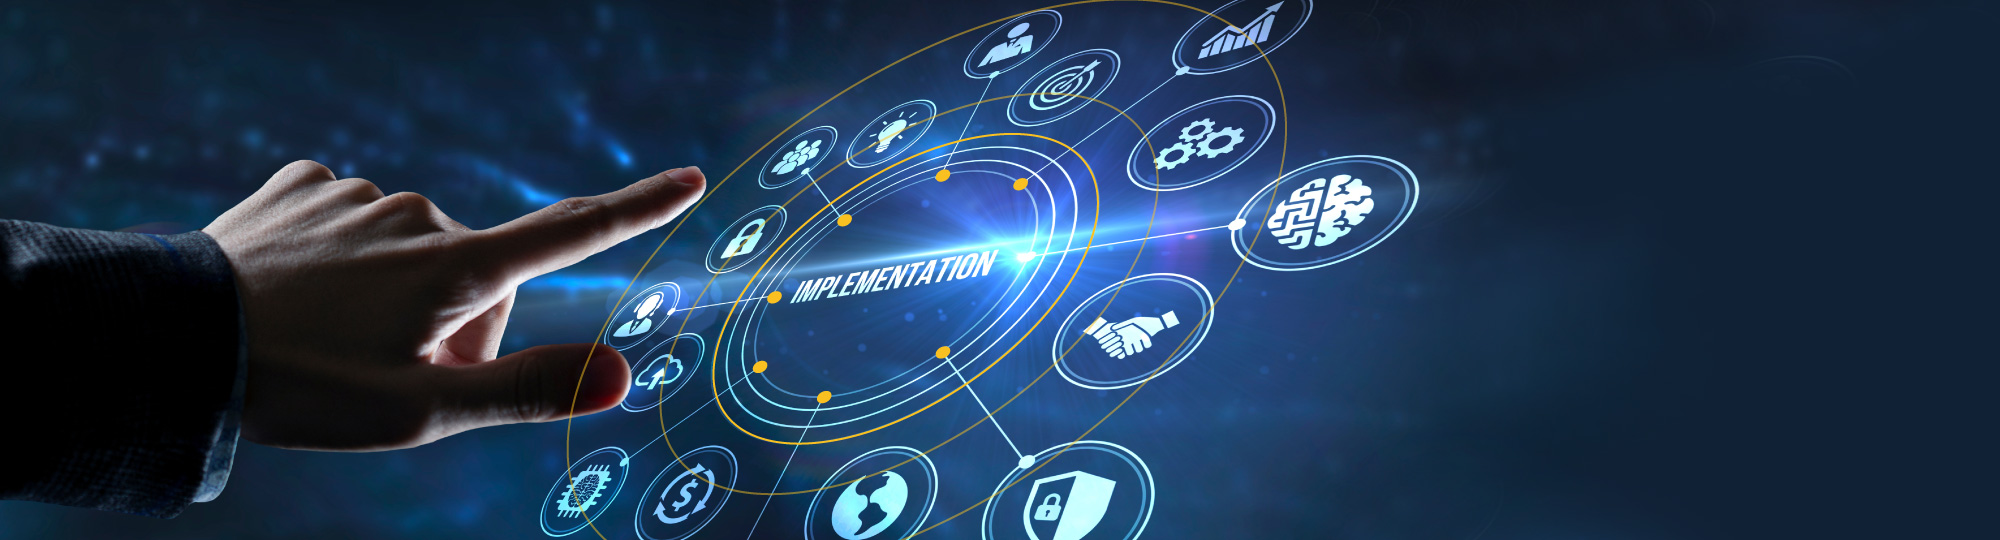 SAP Implementation Services to Drive Innovation-Led Digital Transformation